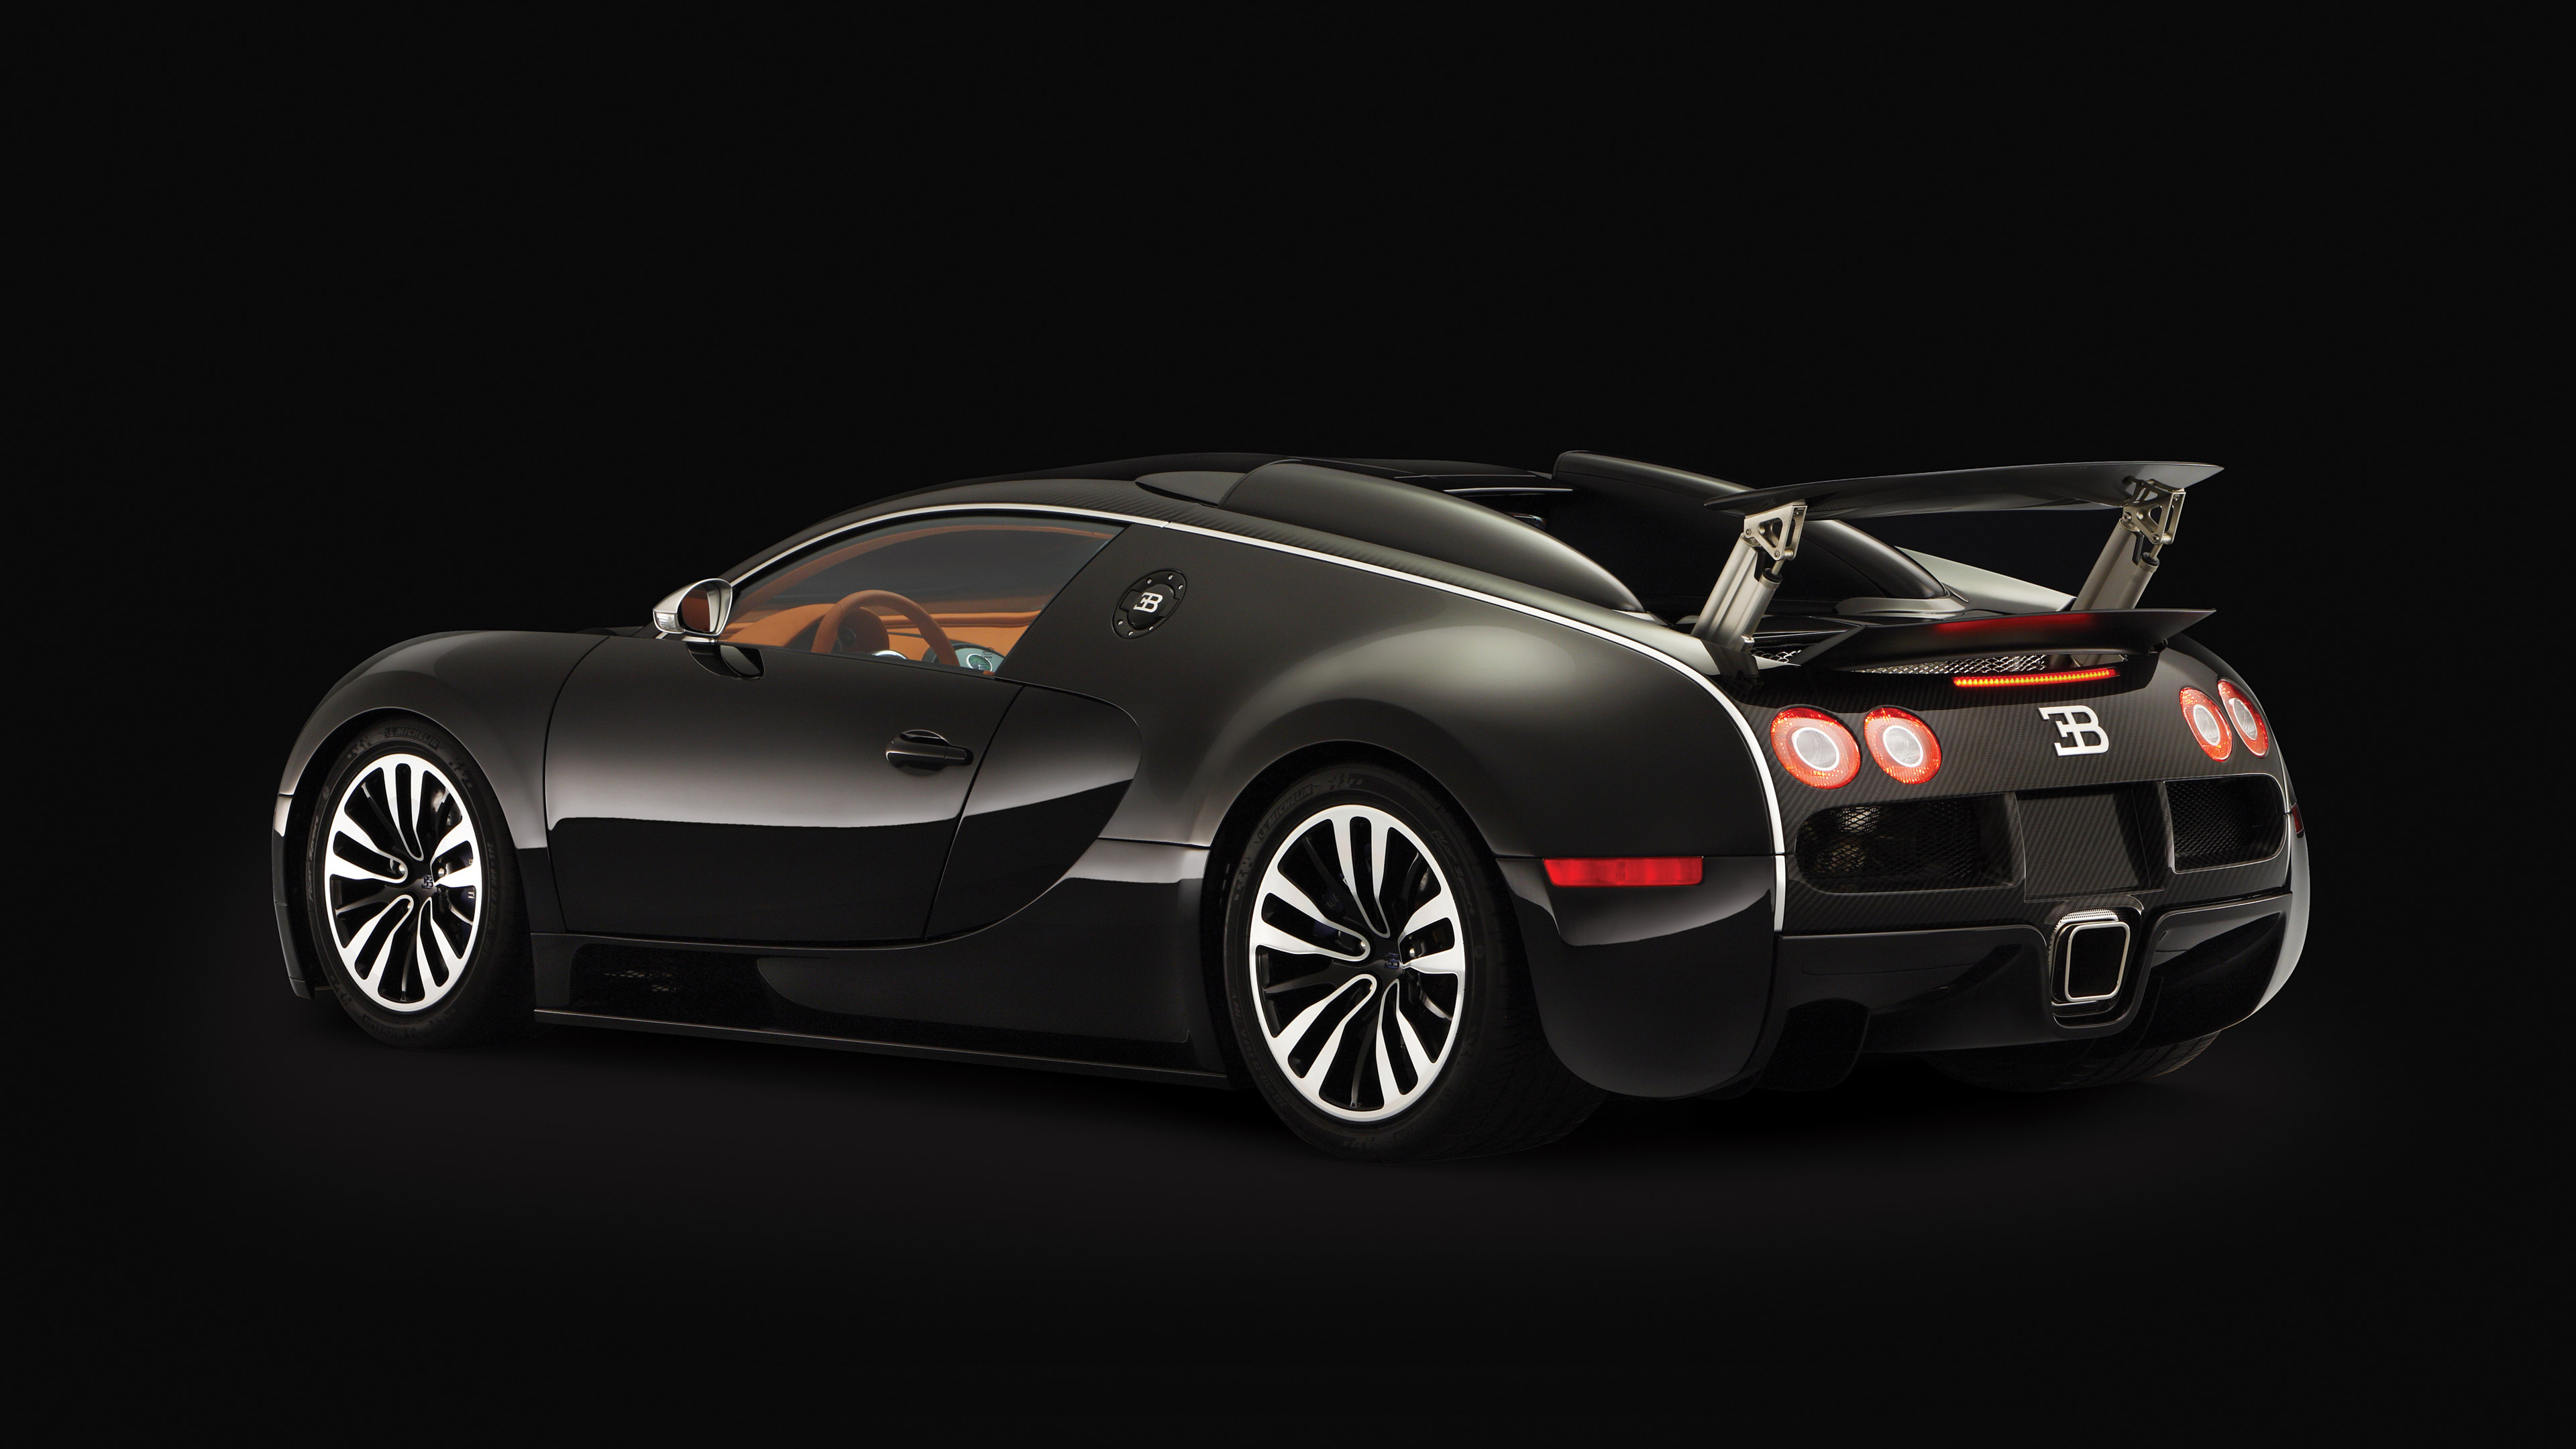 Bugatti Veyron, Sang noir edition, Exclusive HD wallpapers, Sleek and powerful, 3840x2160 4K Desktop